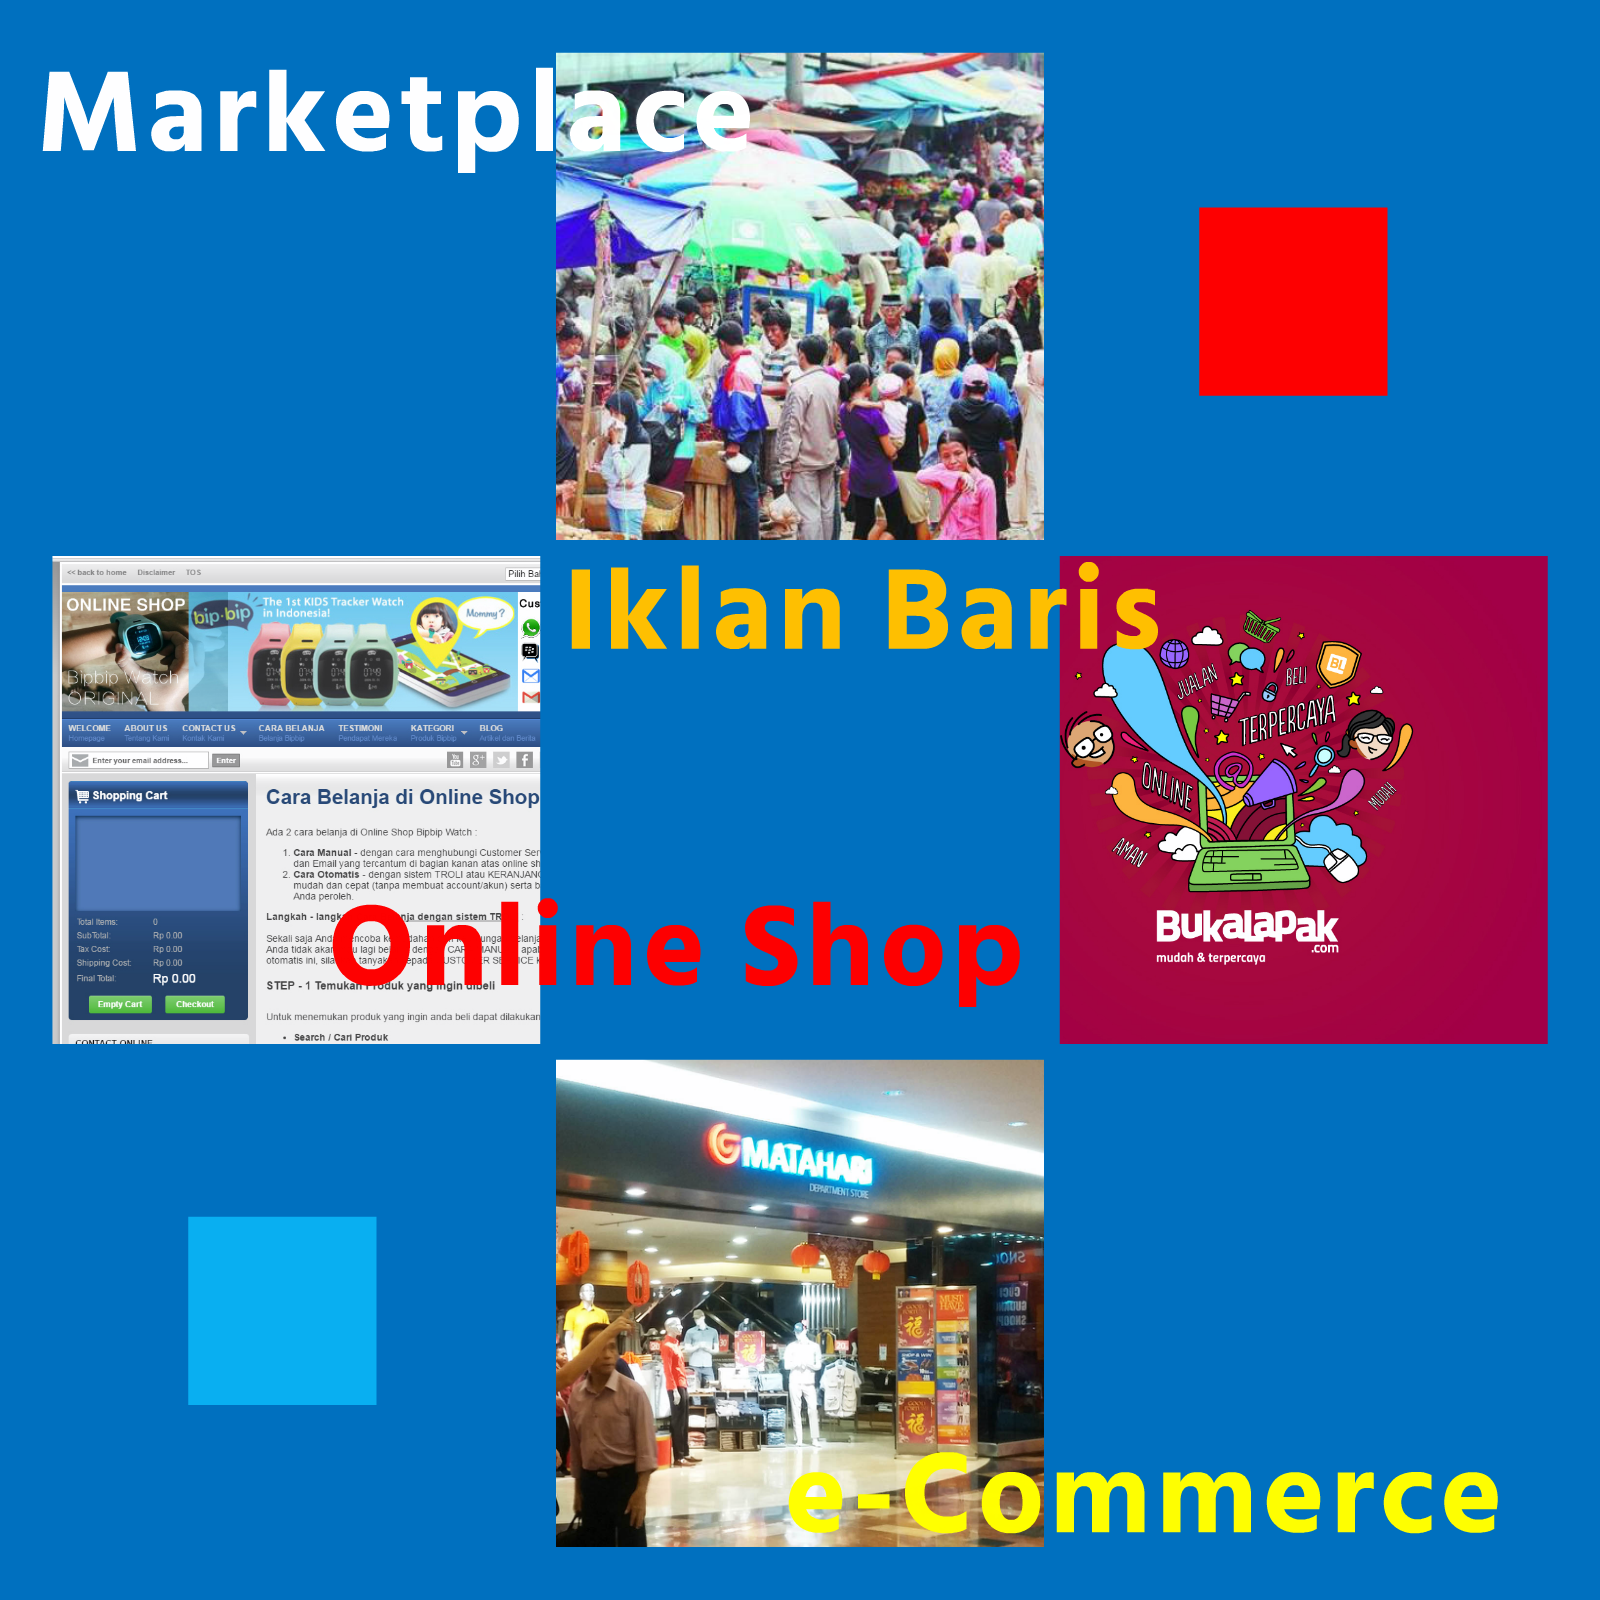 Perbedaan line Shop Marketplace e merce & Iklan Baris